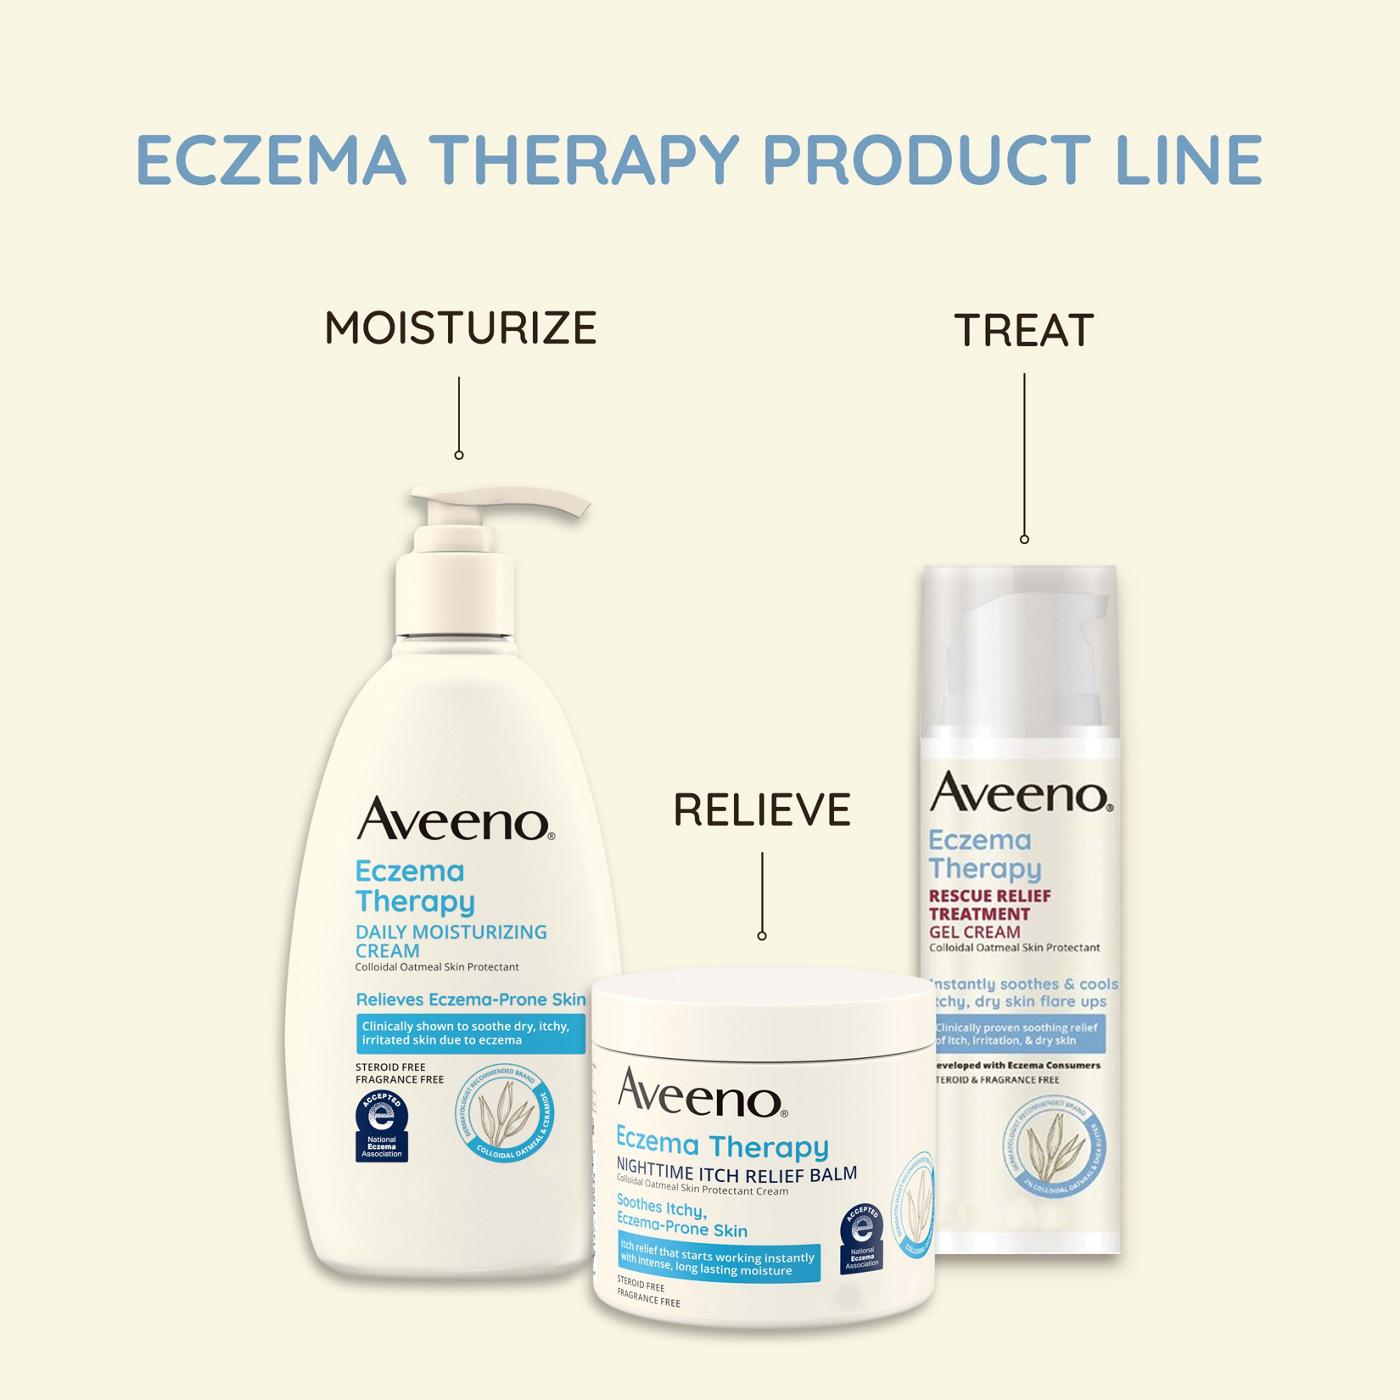 Aveeno Eczema Therapy Daily Moisturizing Cream; image 2 of 7